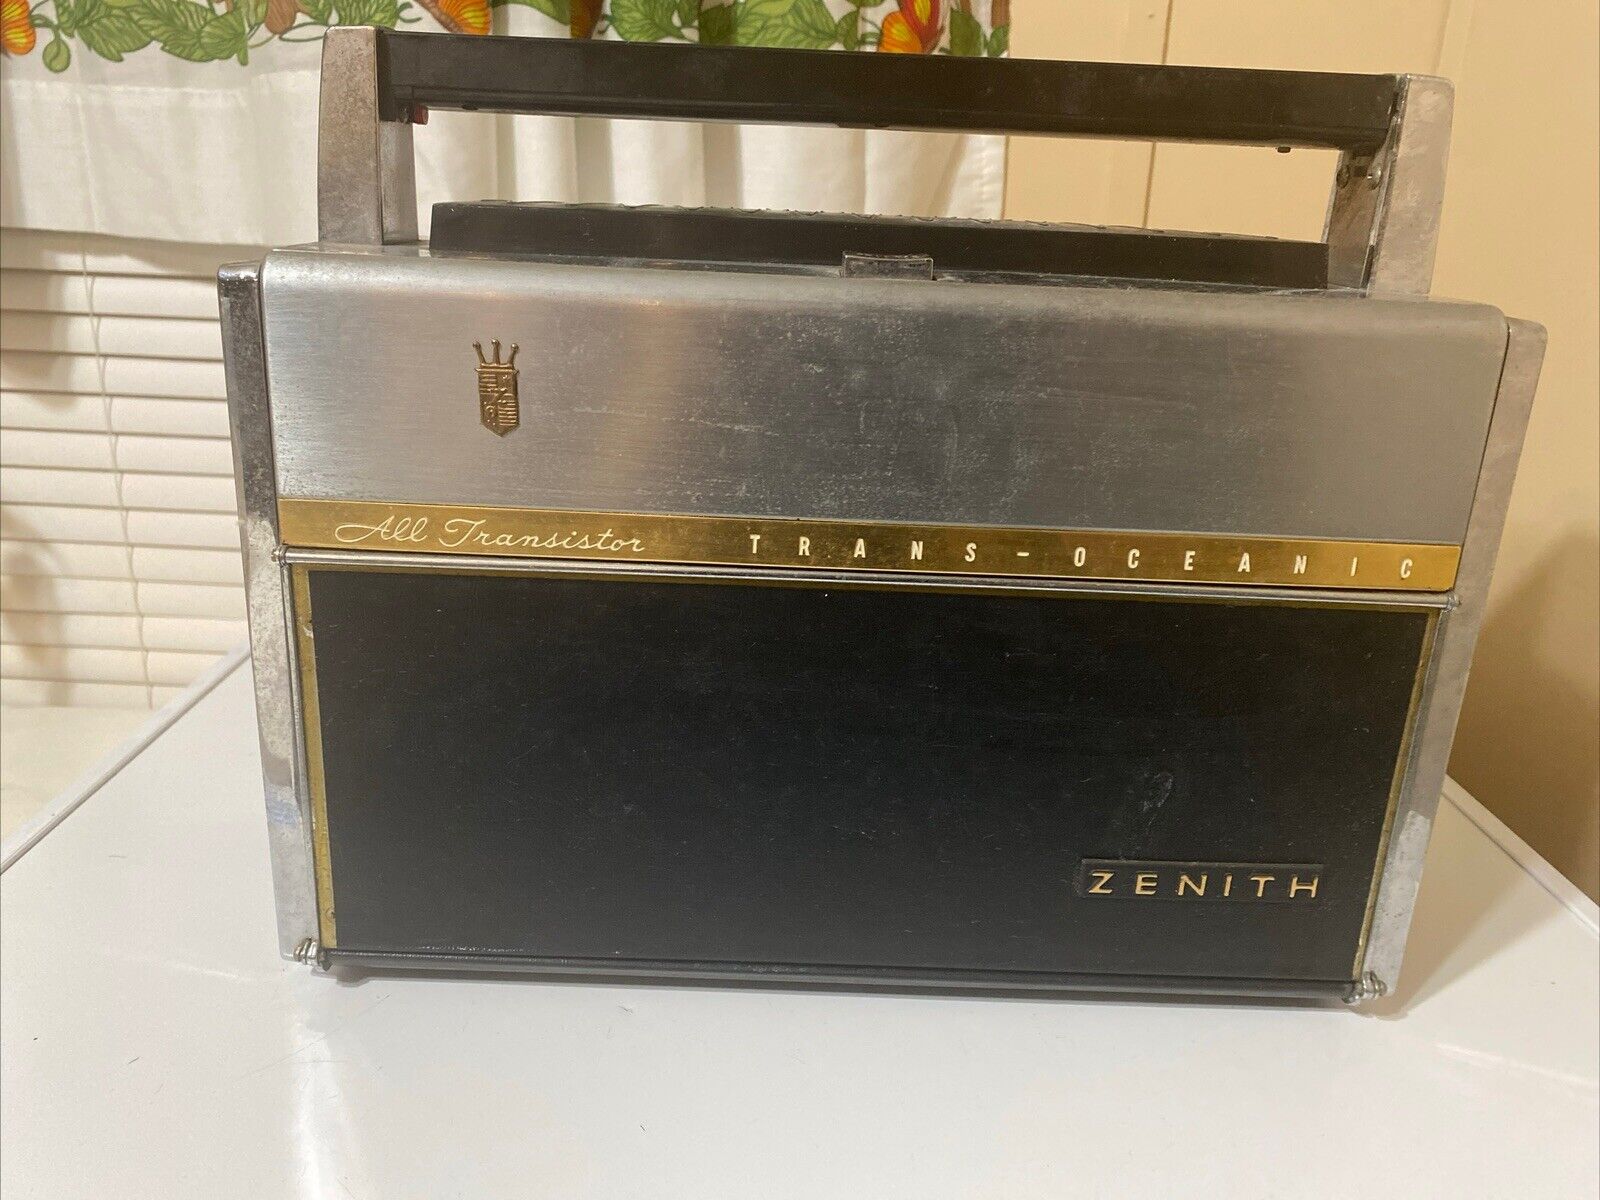 Zenith Royal 1000-D All Transistor Trans-Oceanic short wave portable radio